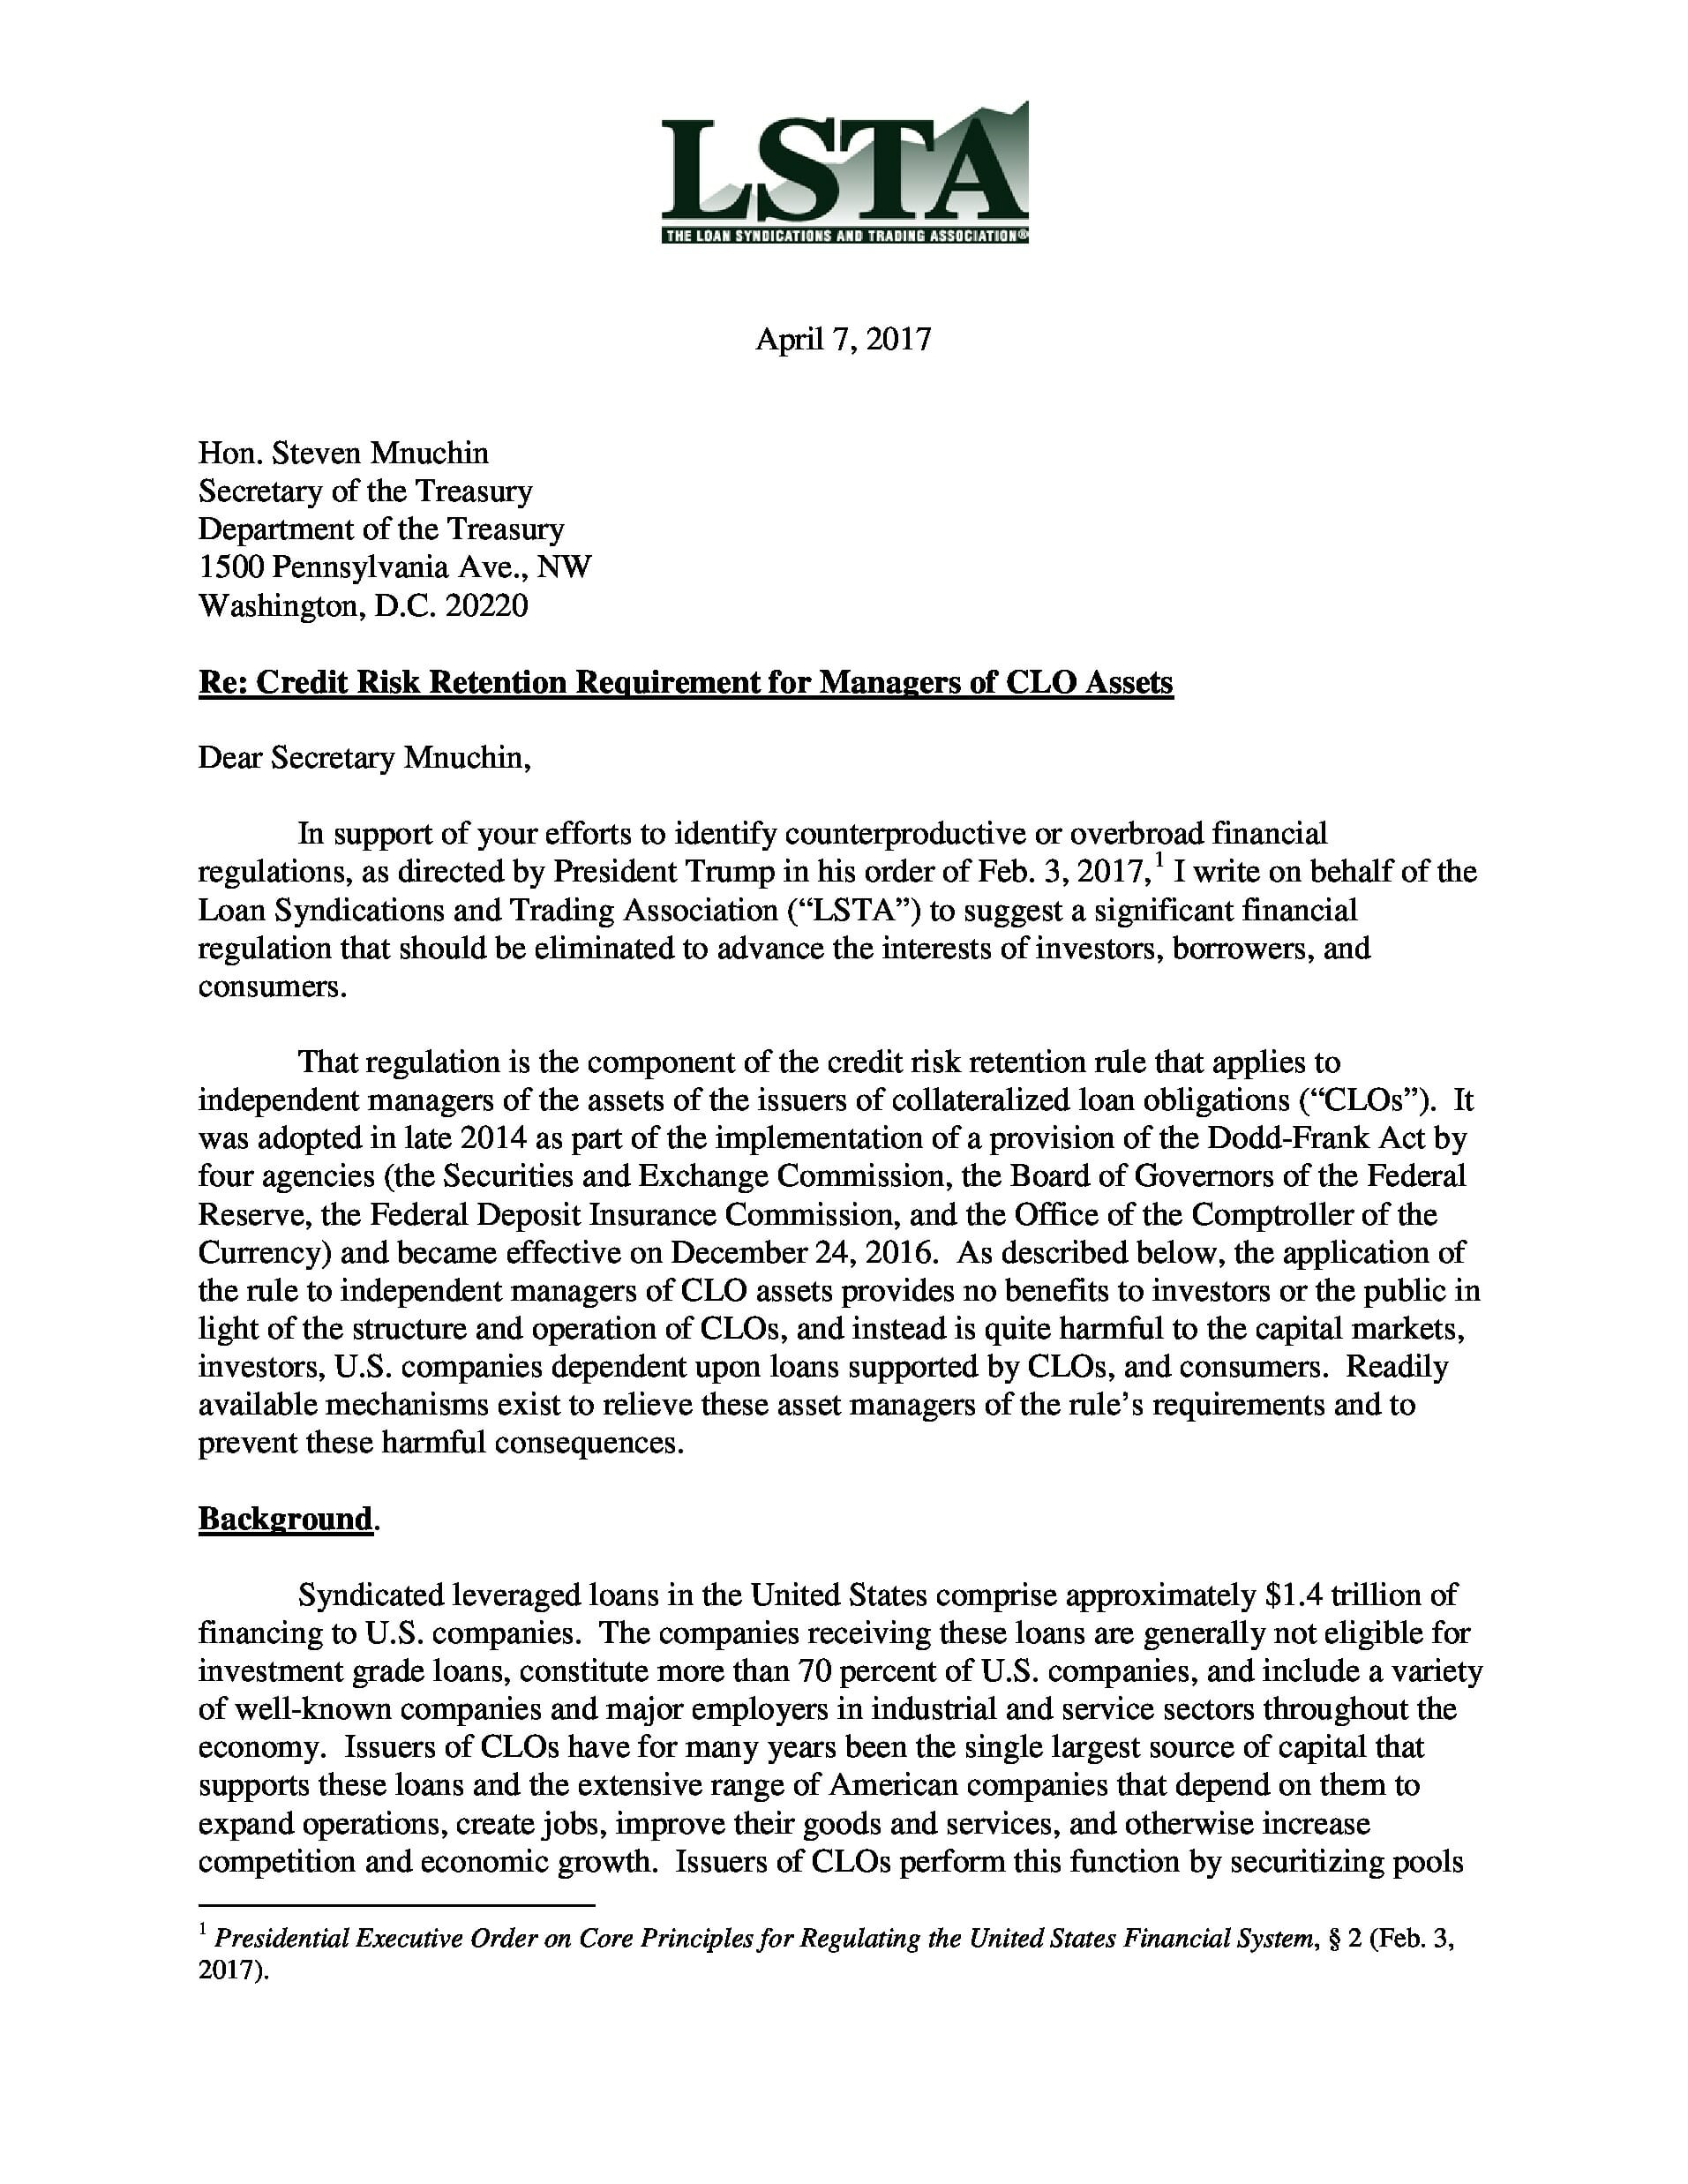 Risk Retention Letter to Treasury LSTA